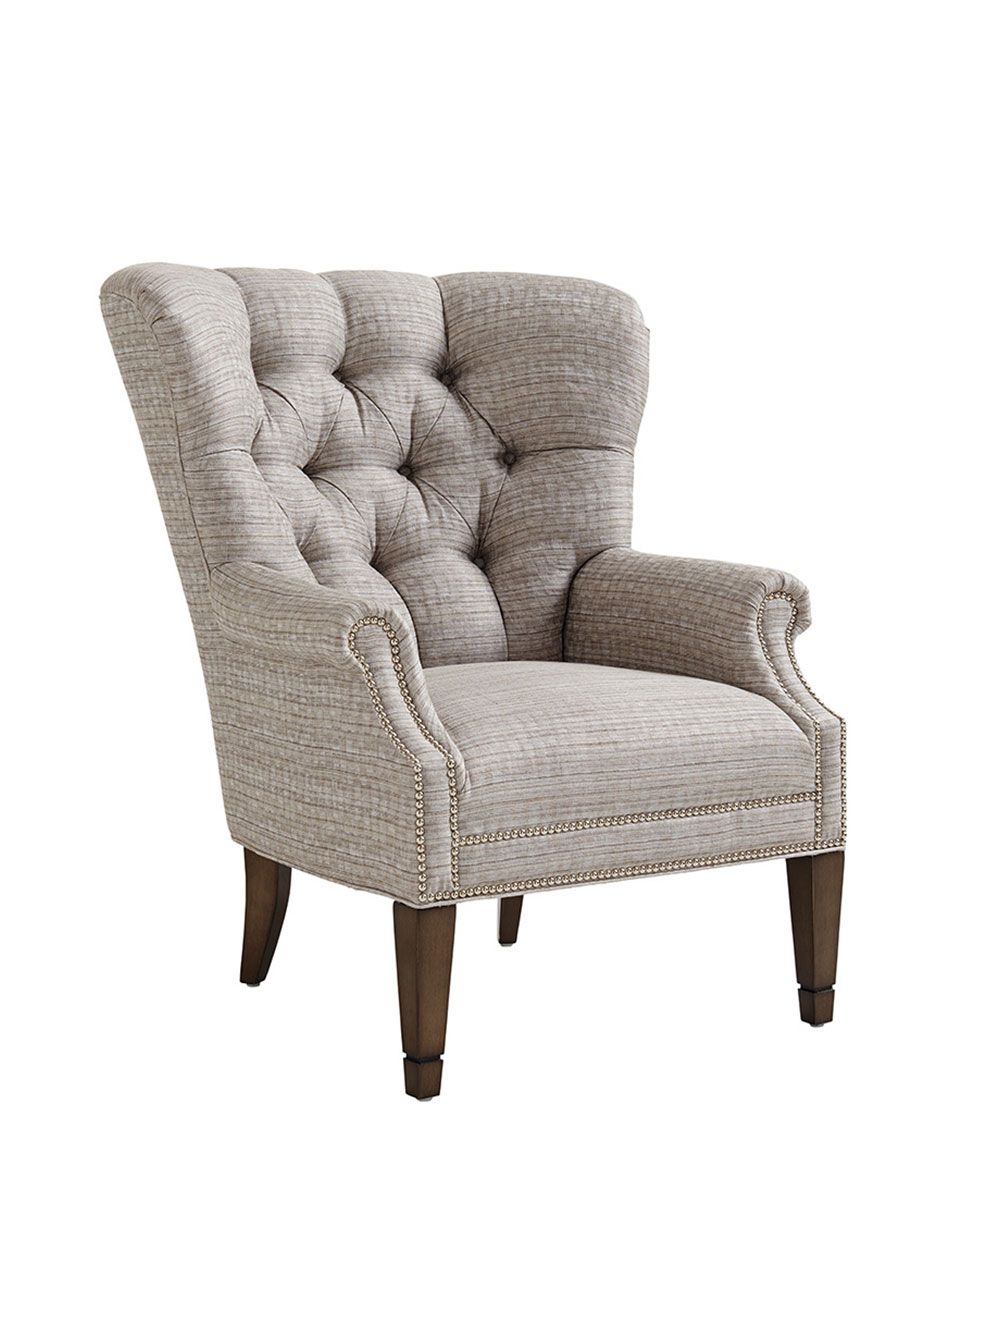 Wilton Wing Chair - Metallic Silver - Nailhead | Lexington 7612-11